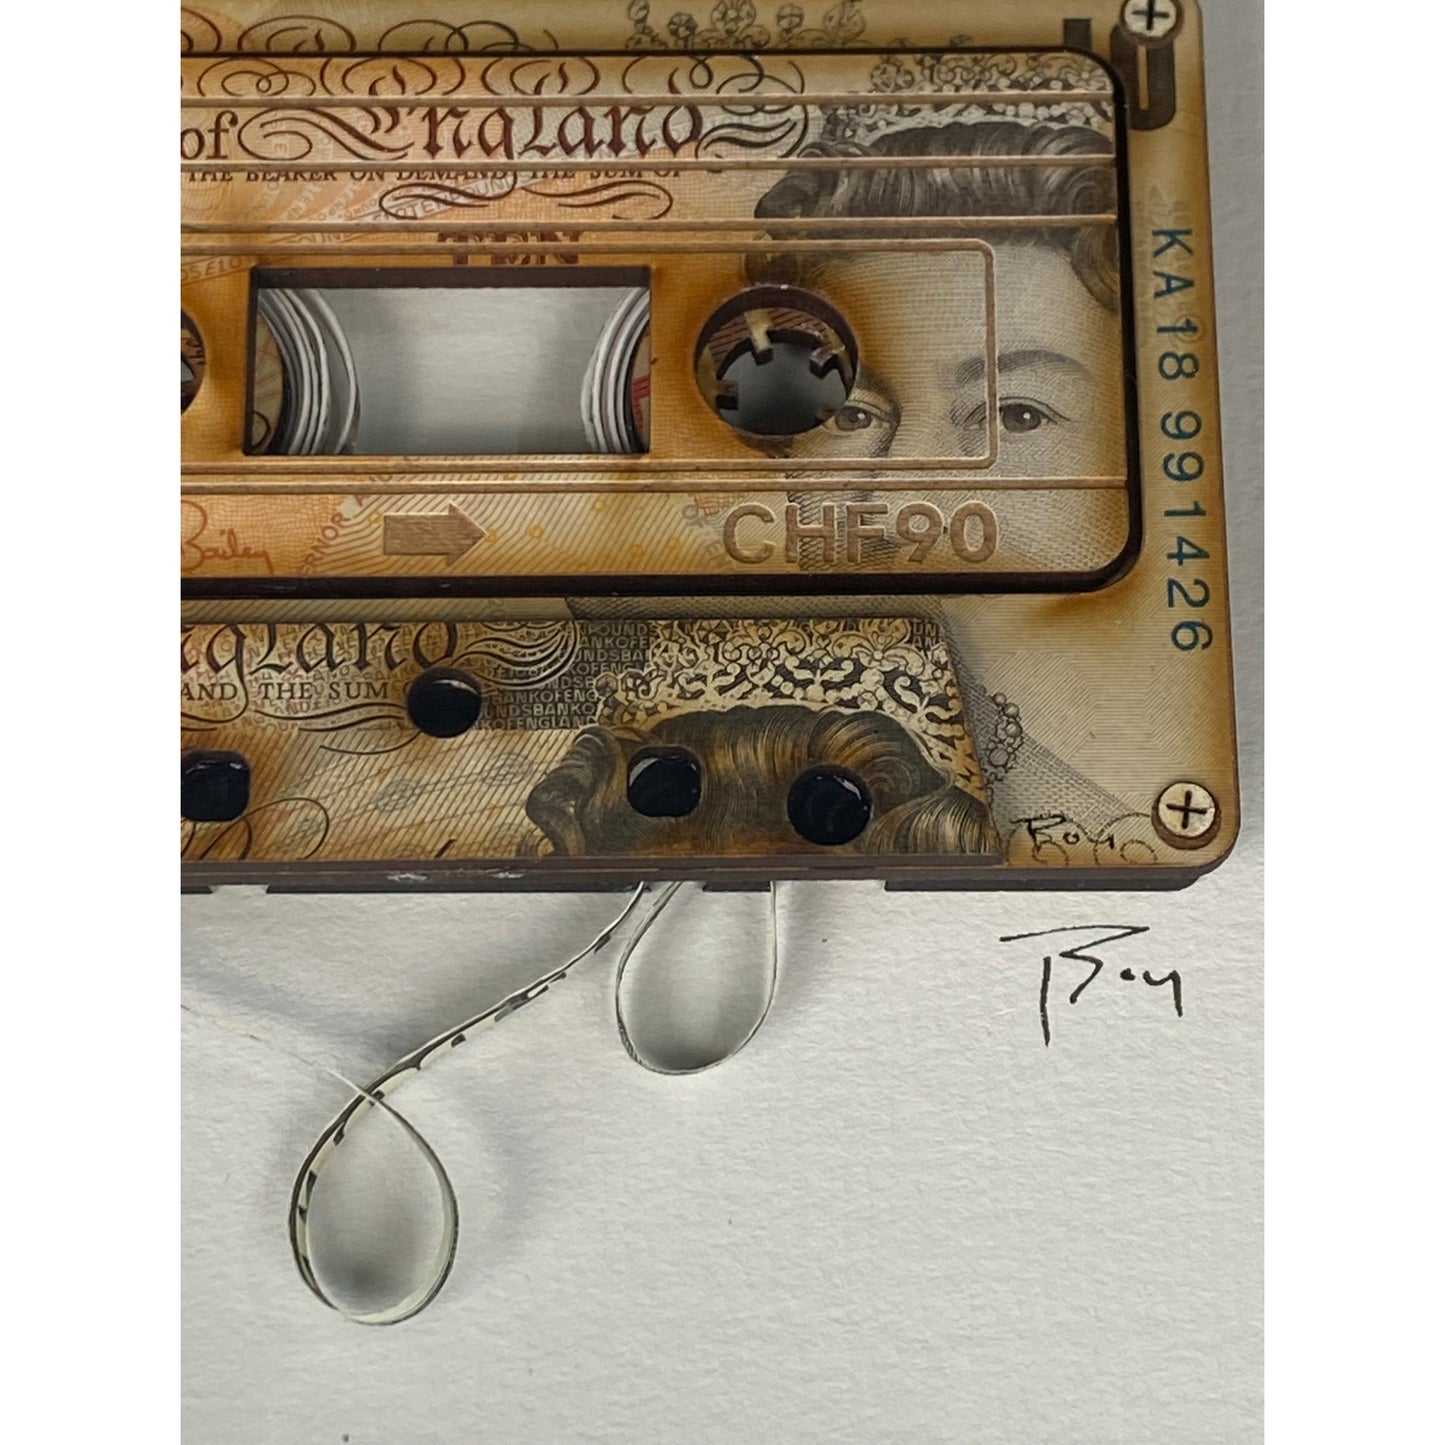 Cassette £10 edition - Smolensky Gallery